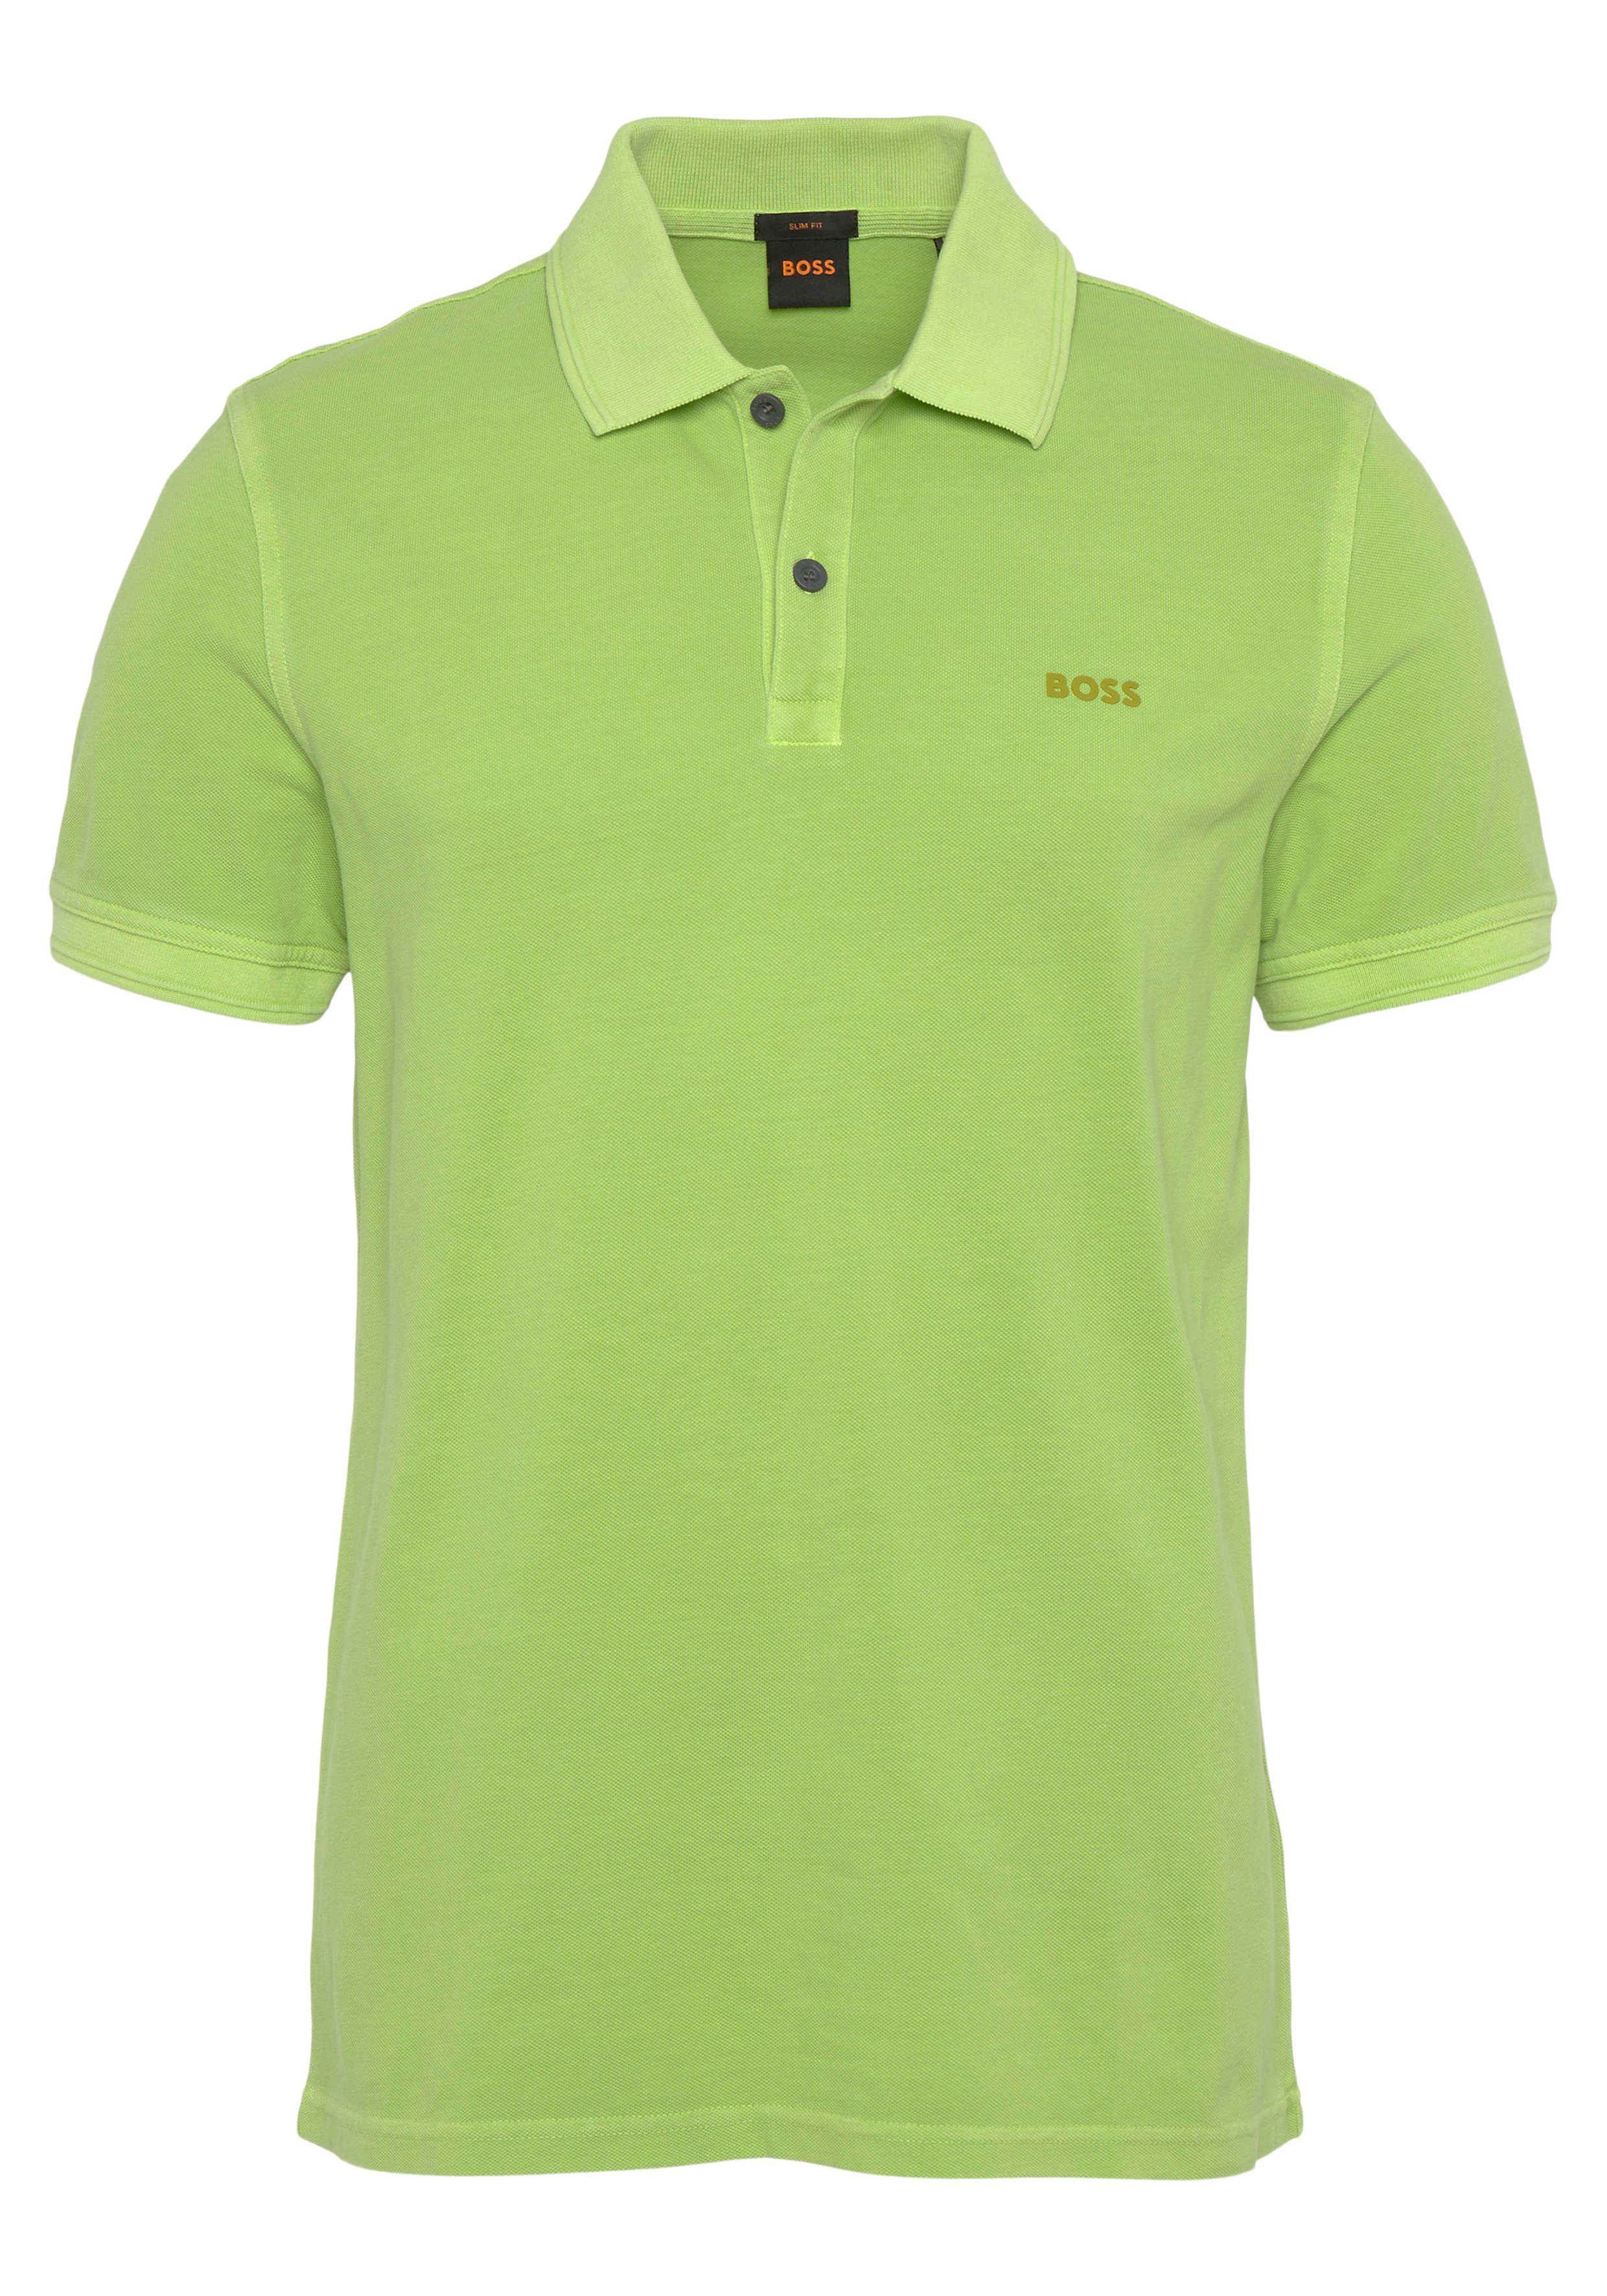 ORANGE Bright Prime Logoschriftzug Poloshirt Green mit BOSS am Brustkorb